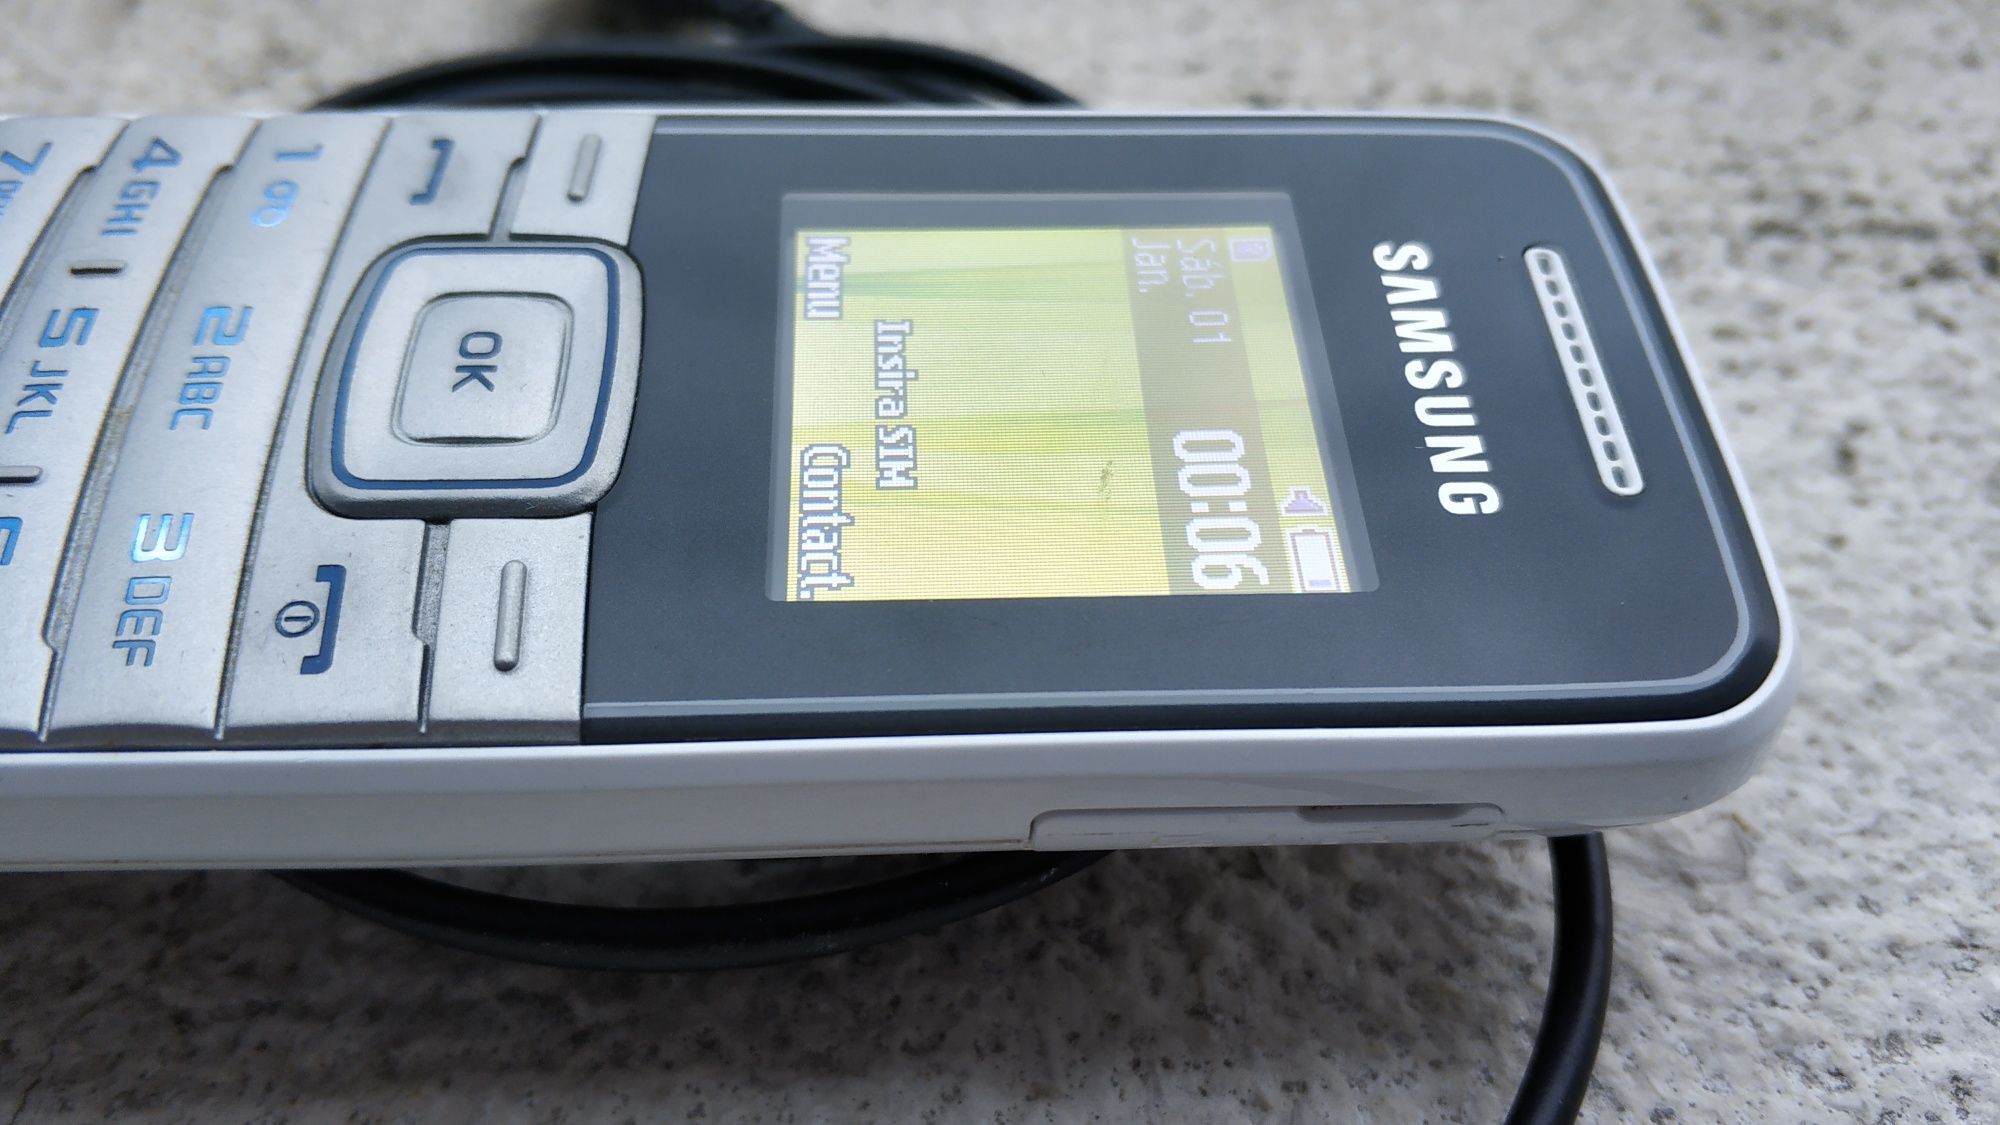 Telemóvel Samsung GT-E1050